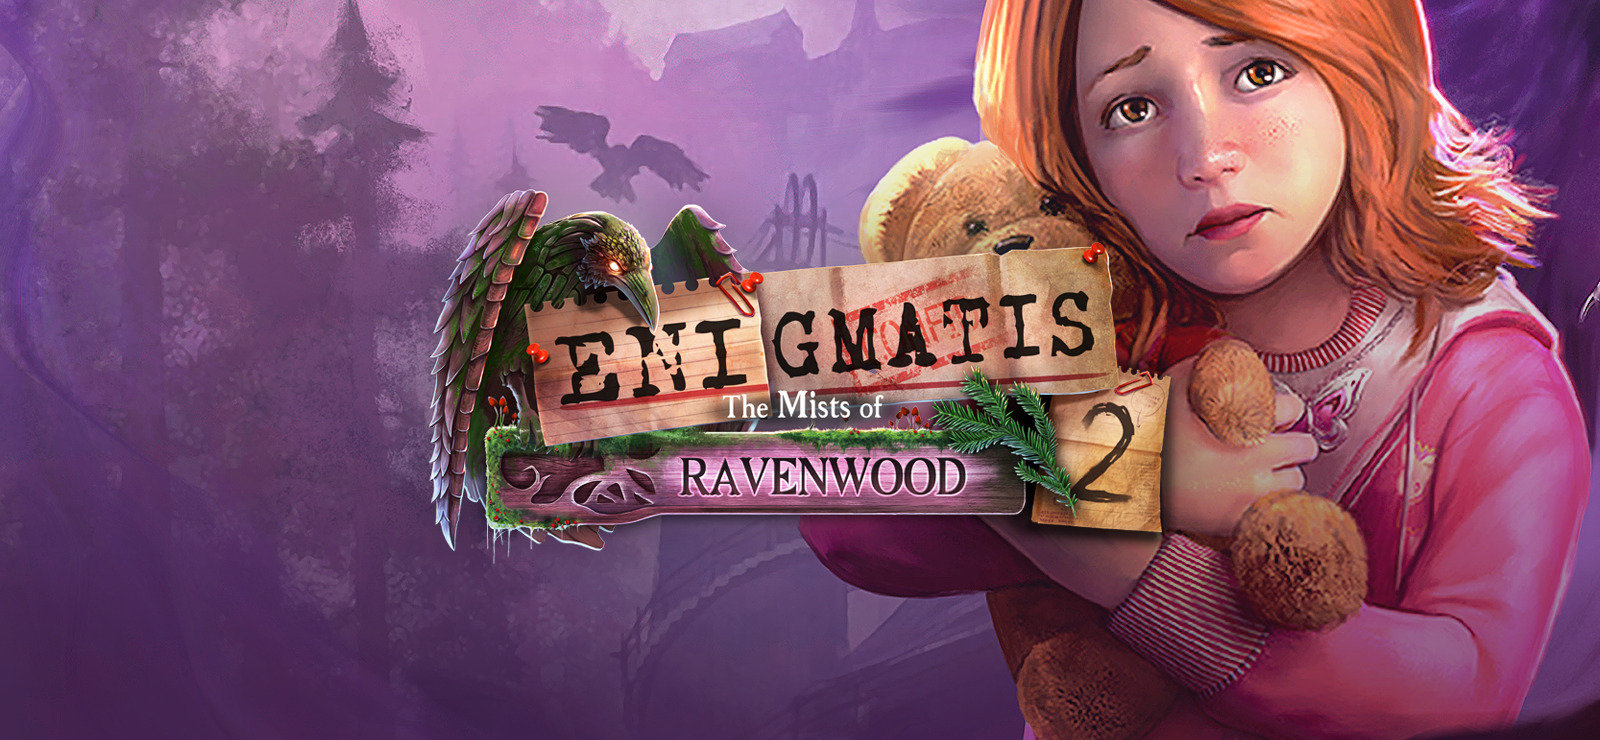 enigmatis-2-the-mists-of-ravenwood-free-download-gog-unlocked